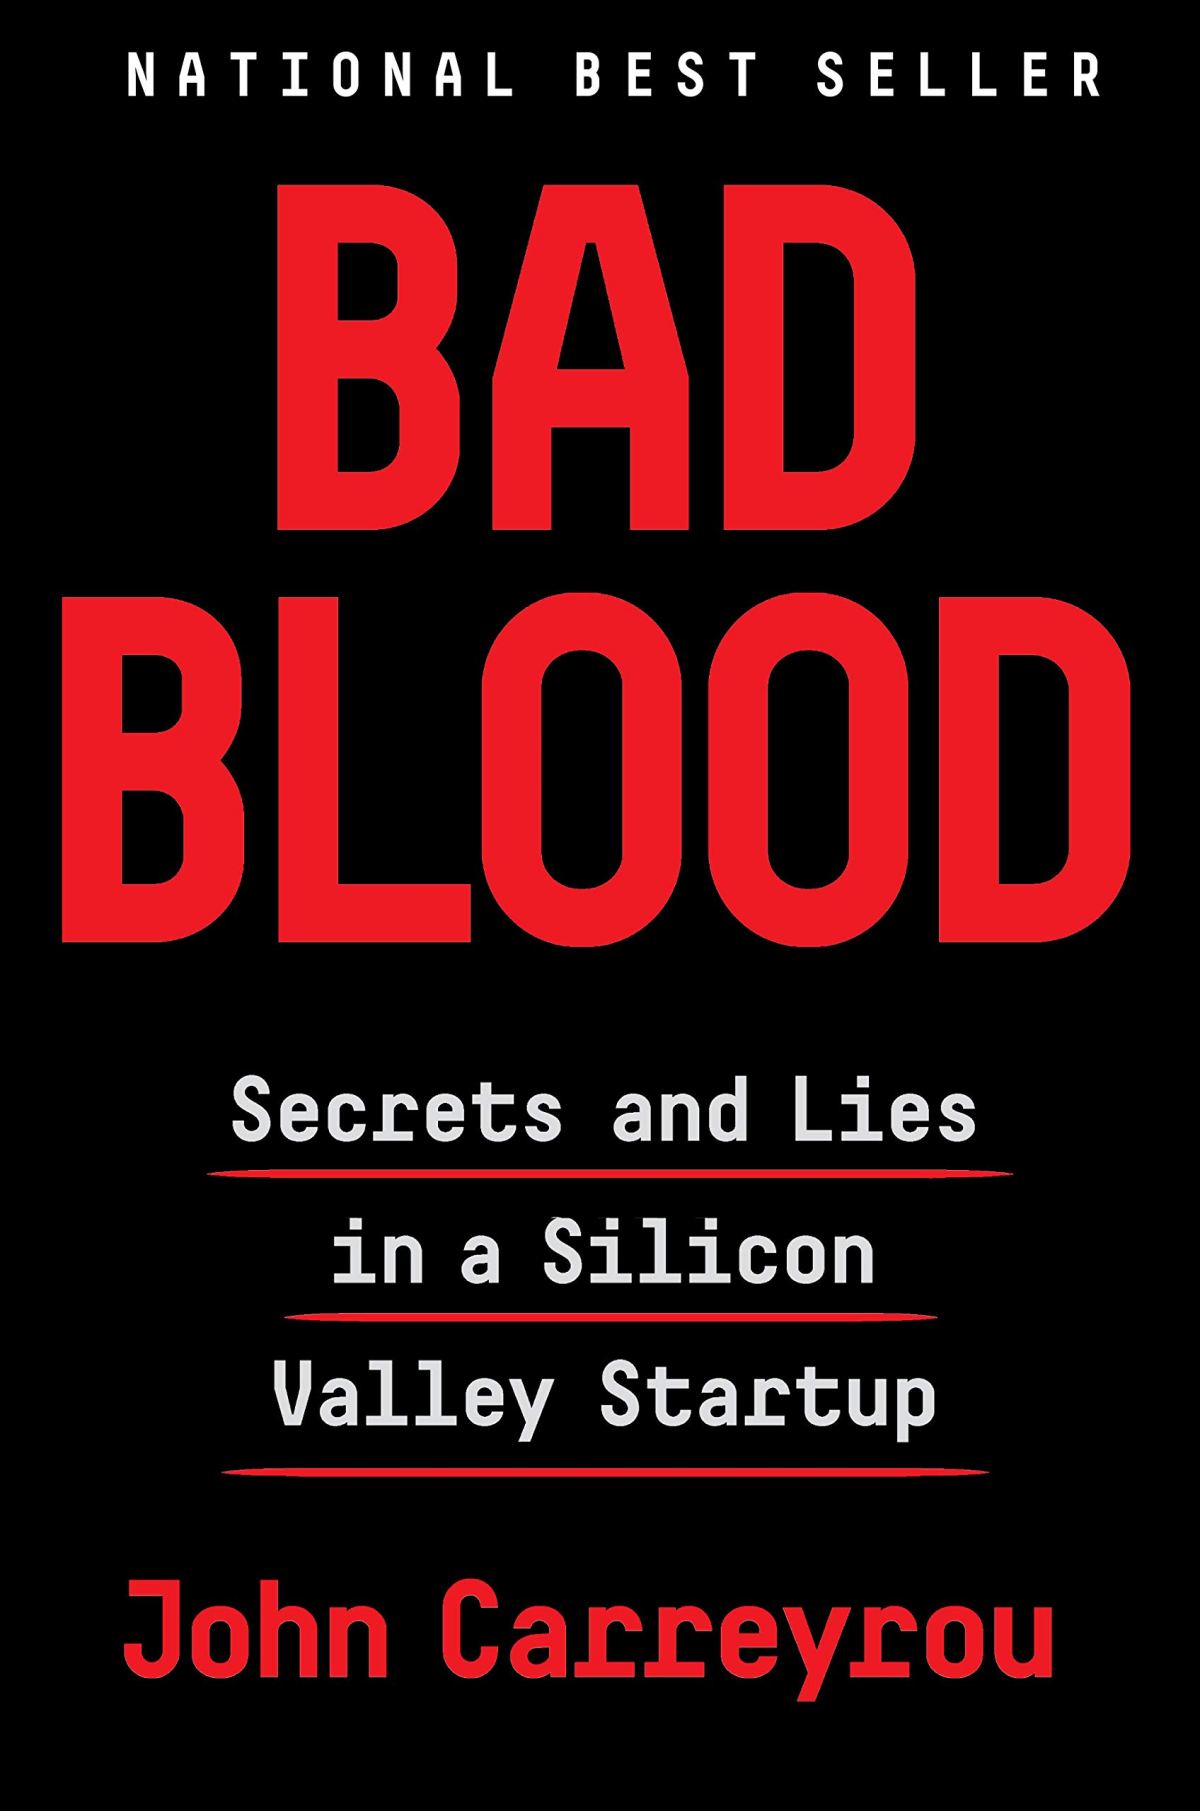 Book 23 – Bad Blood by John Carreyrou